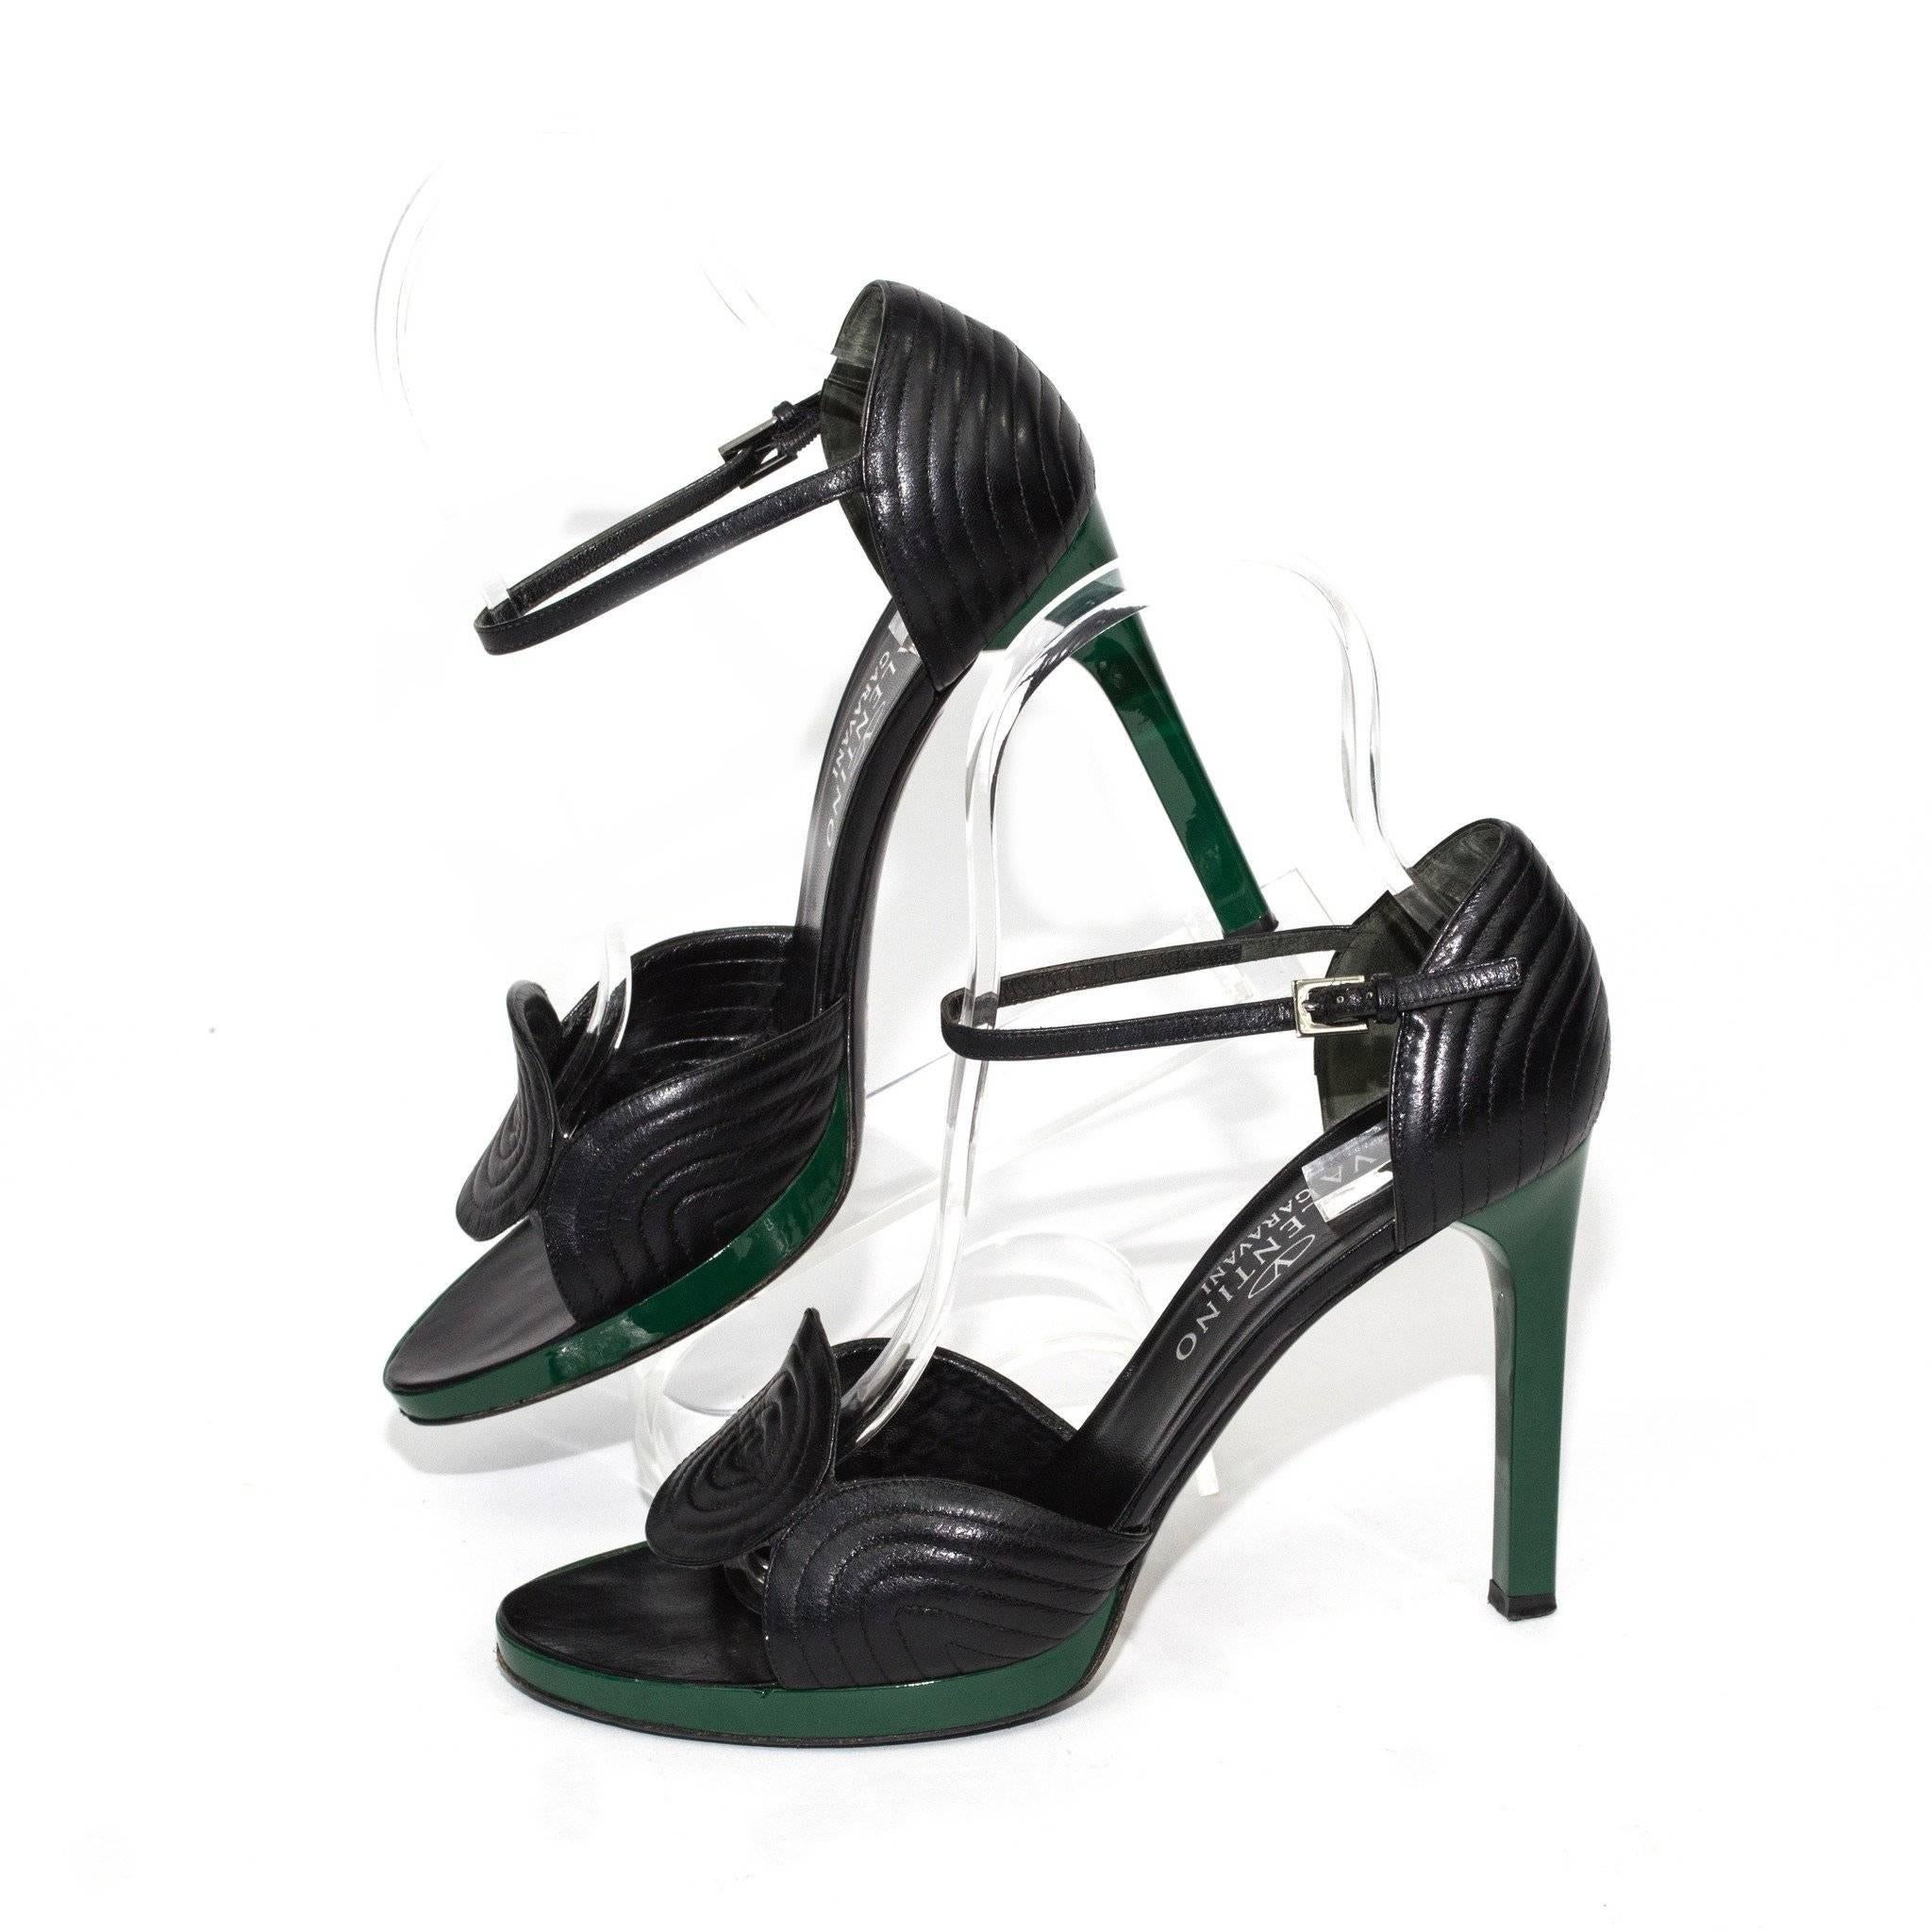 Valentino Black Leather Ankle Strap Platform Heels

Size 40

4 Inch Heel

In good condition.